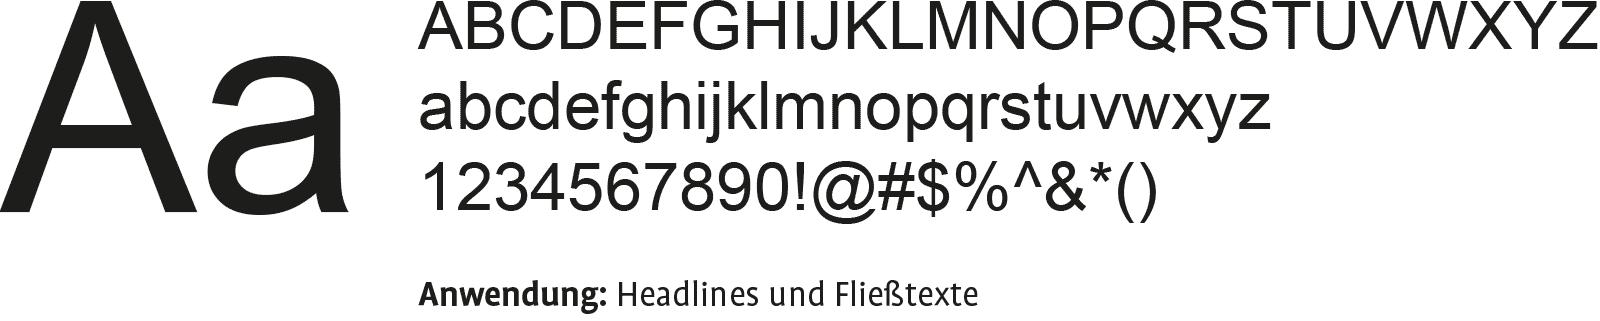 Typografie-Korrespondenzschriften